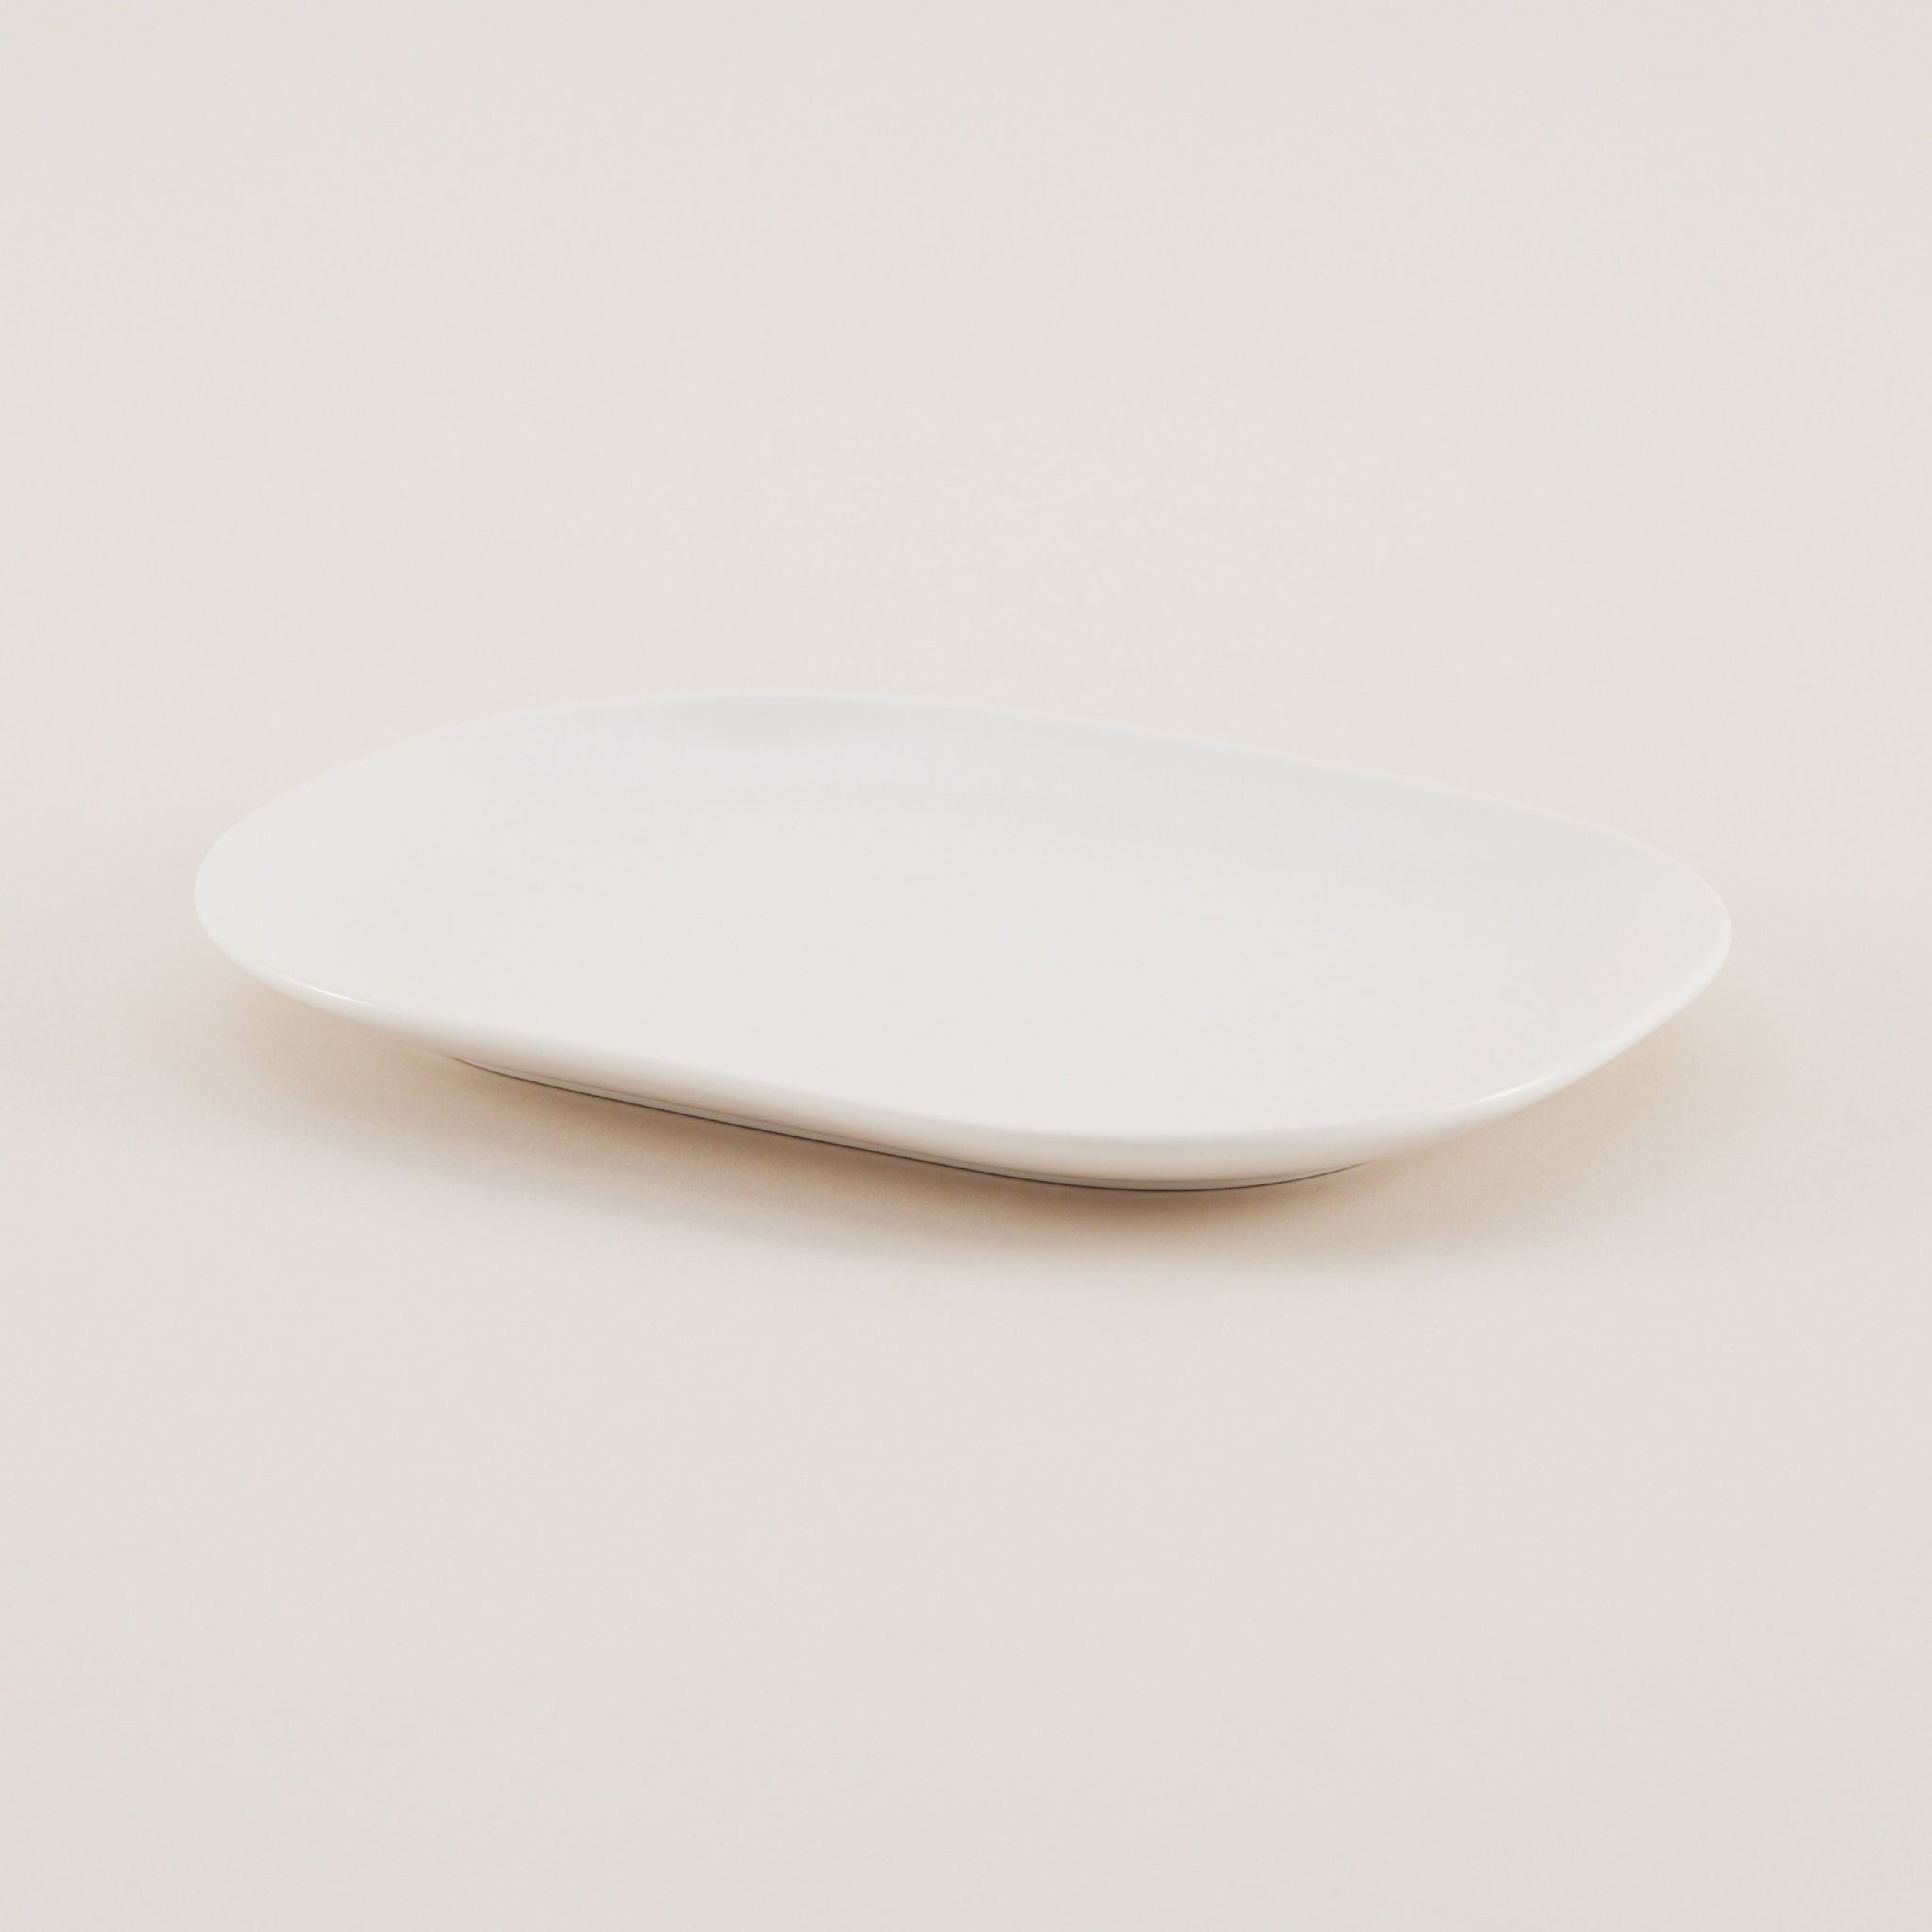 Bowlbowl Newtro Plate | จานเซรามิก